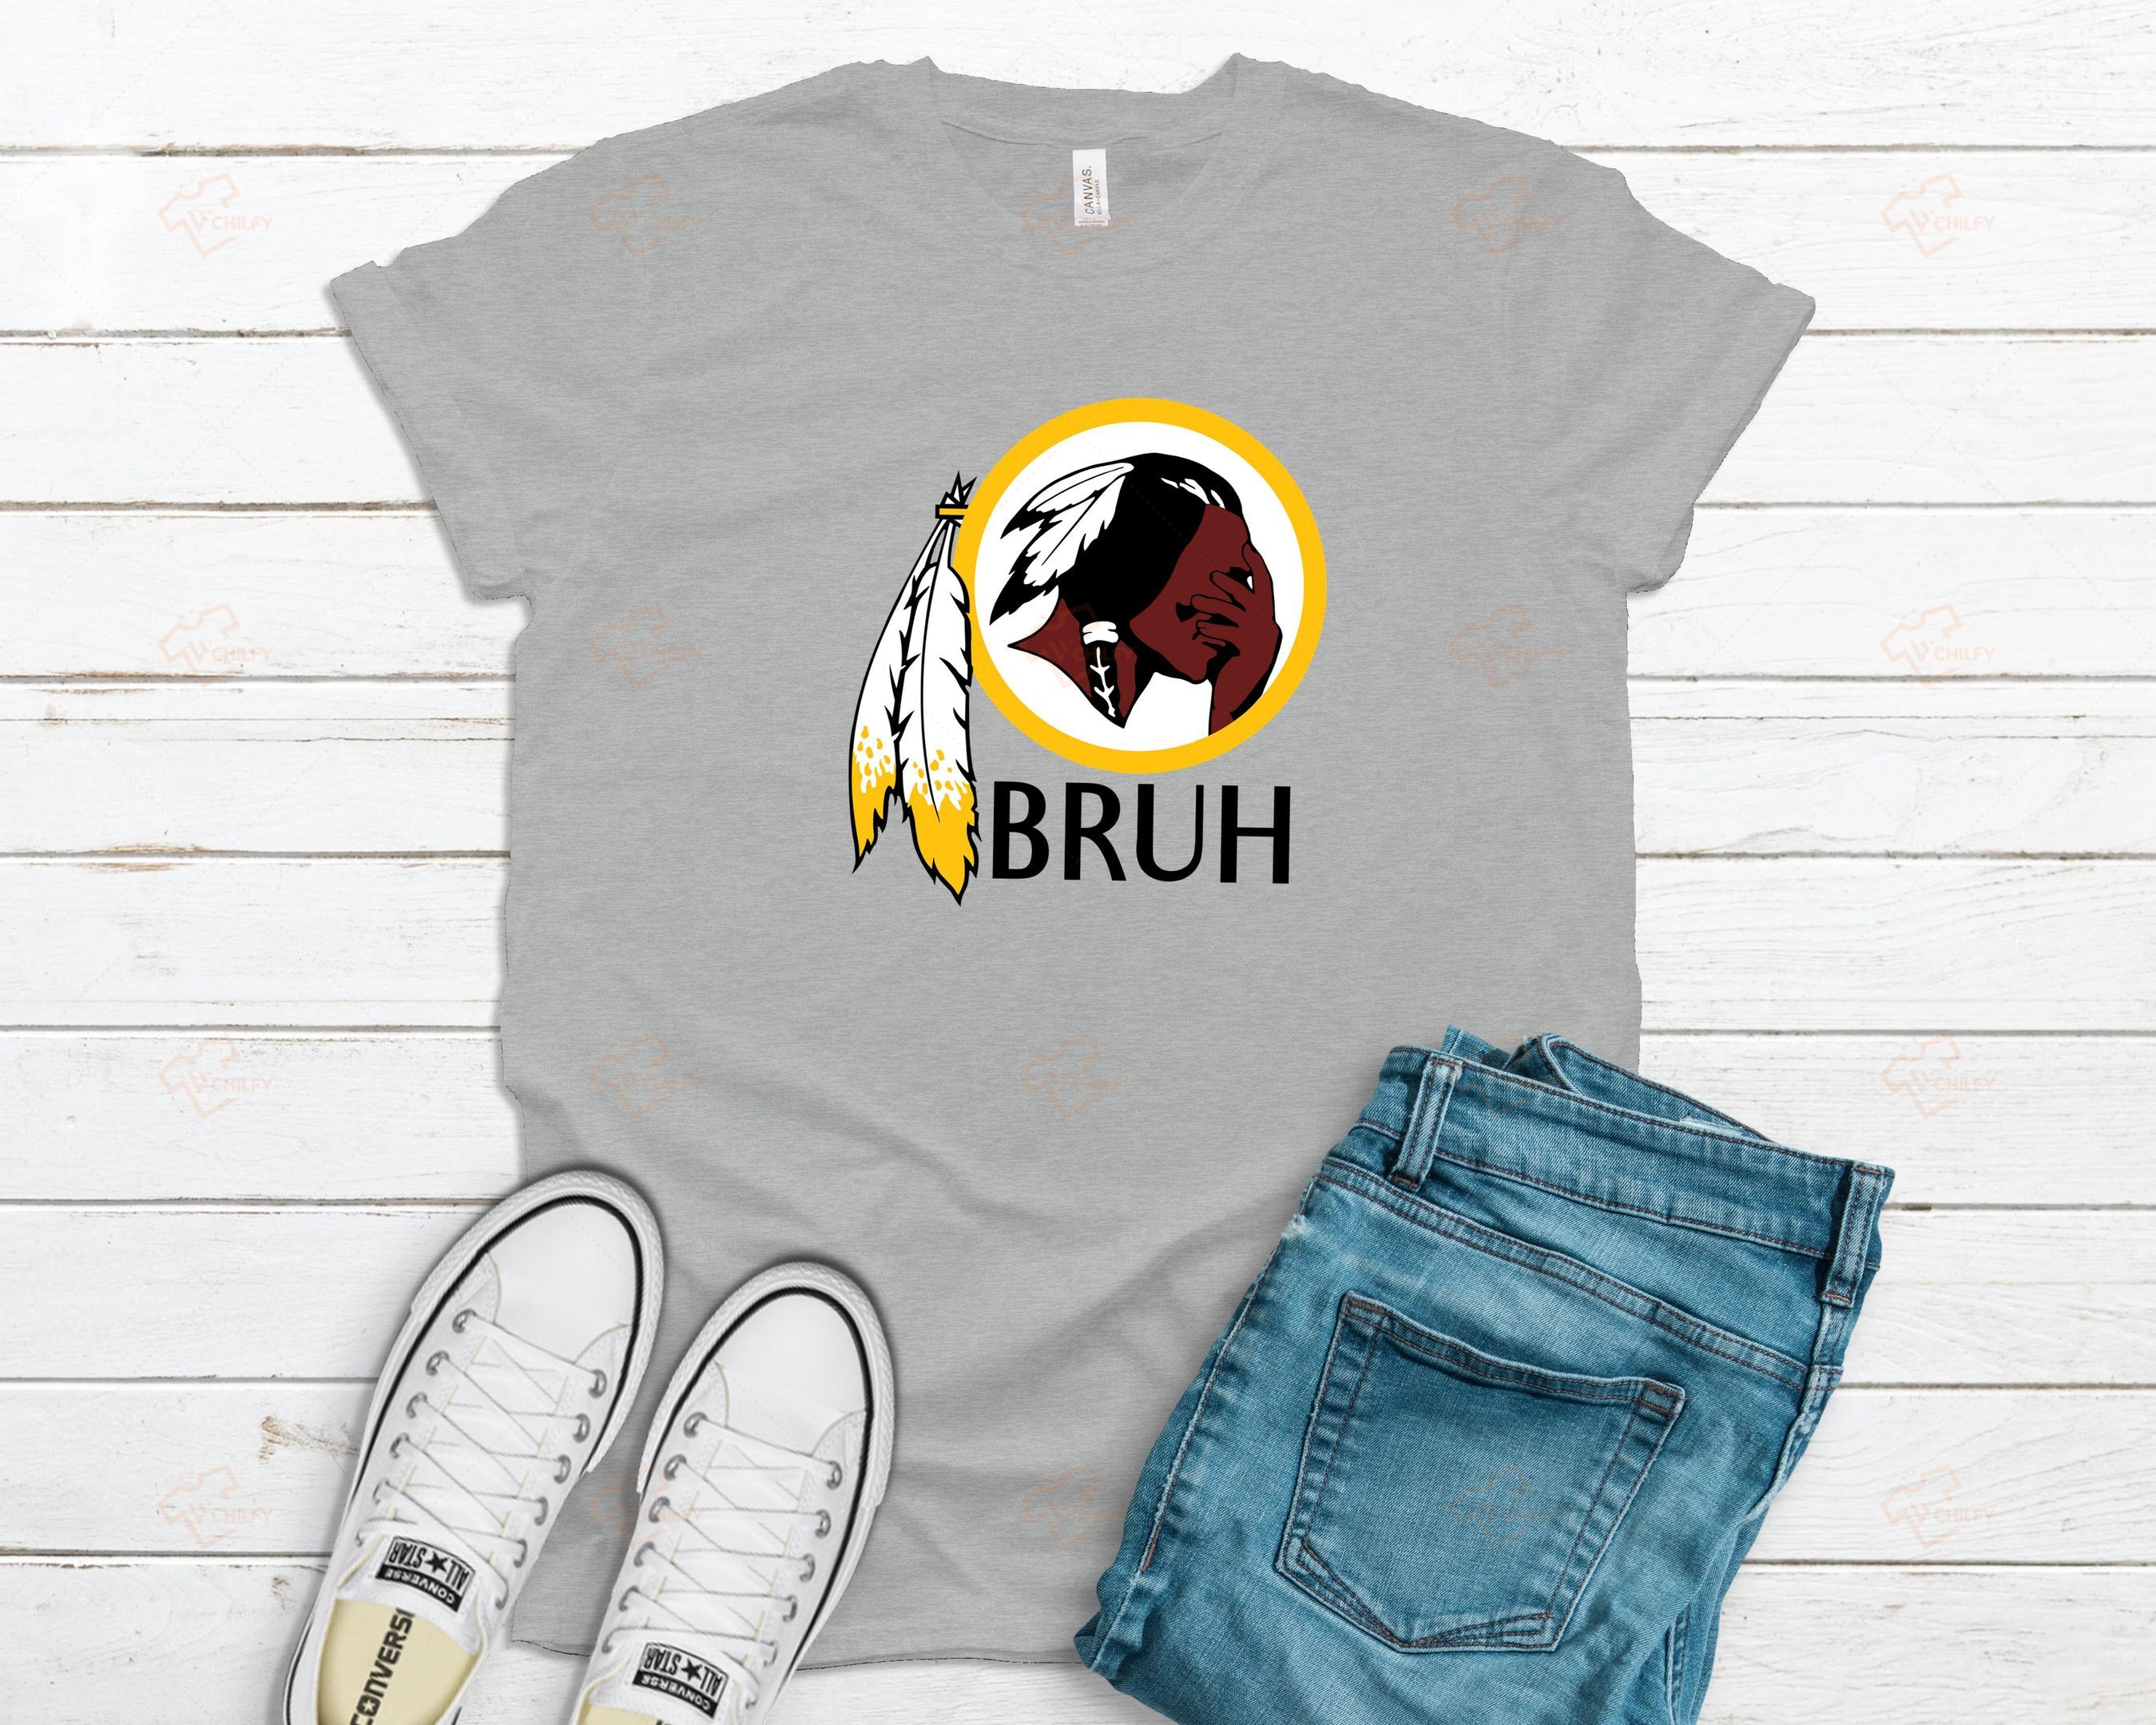 Bruh, American indian shirt, Native pride shirt, Native shirt